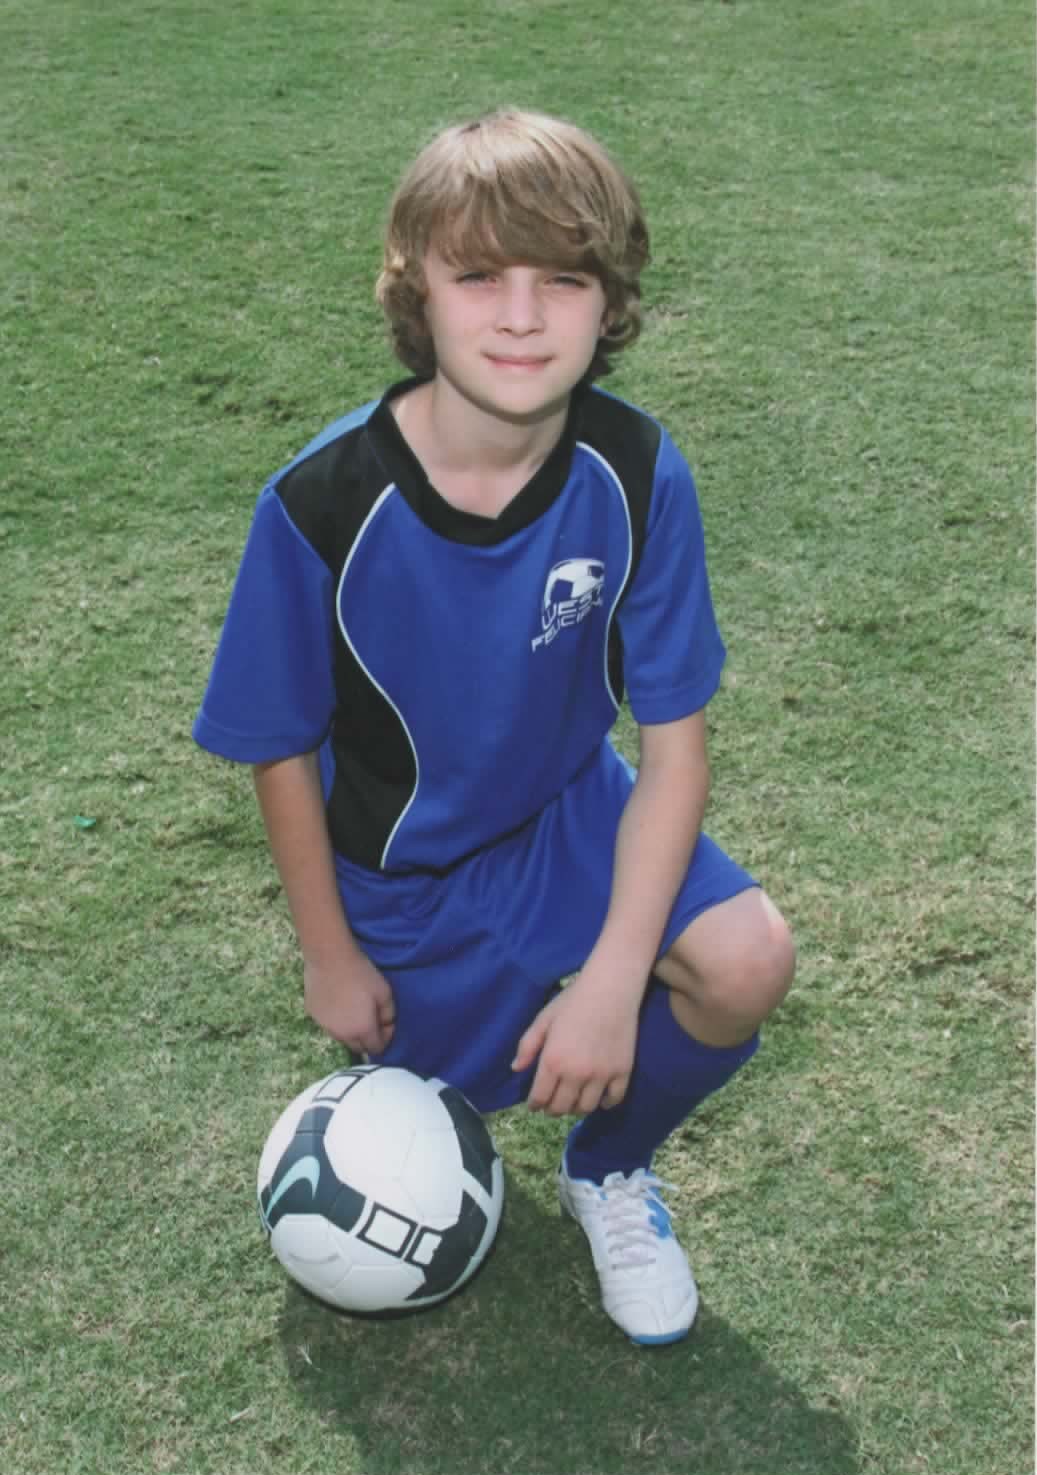 Toby Nichols 7th year of soccer